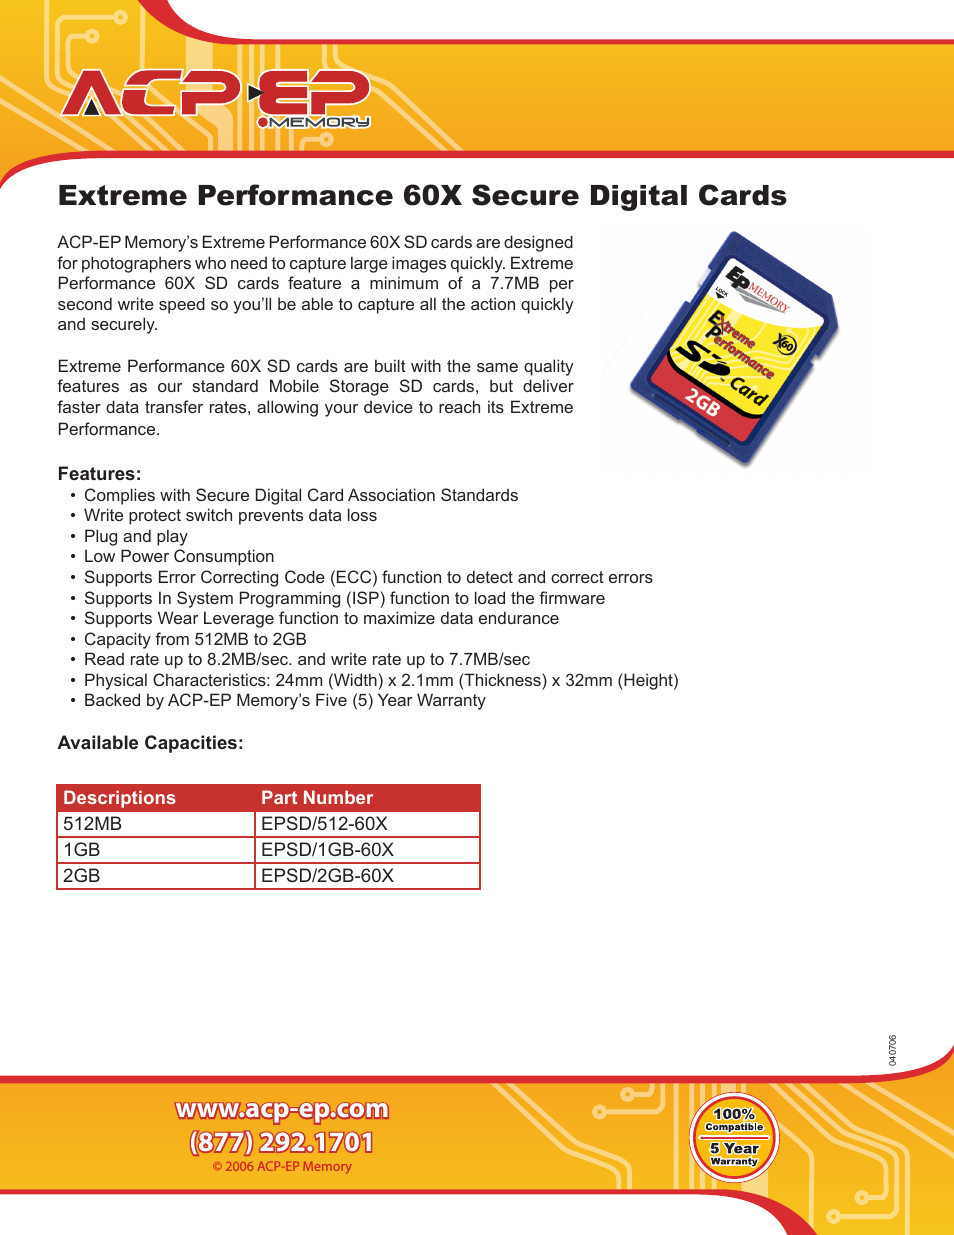 Extreme Performance EPSD/512-60X